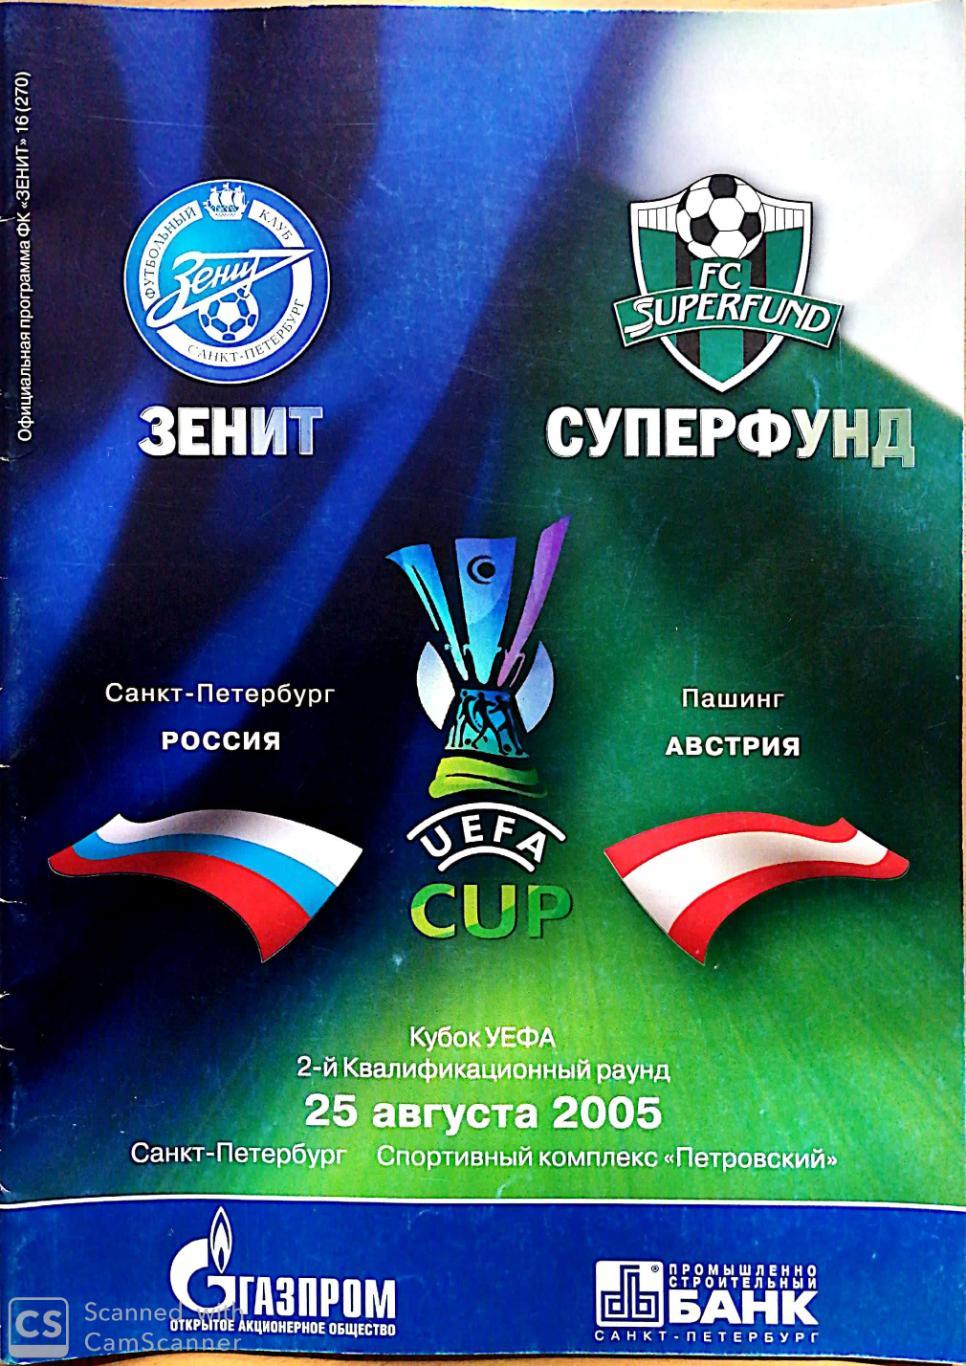 Кубок УЕФА-2005/06. Зенит Россия - Суперфунд Австрия 25.08.2005